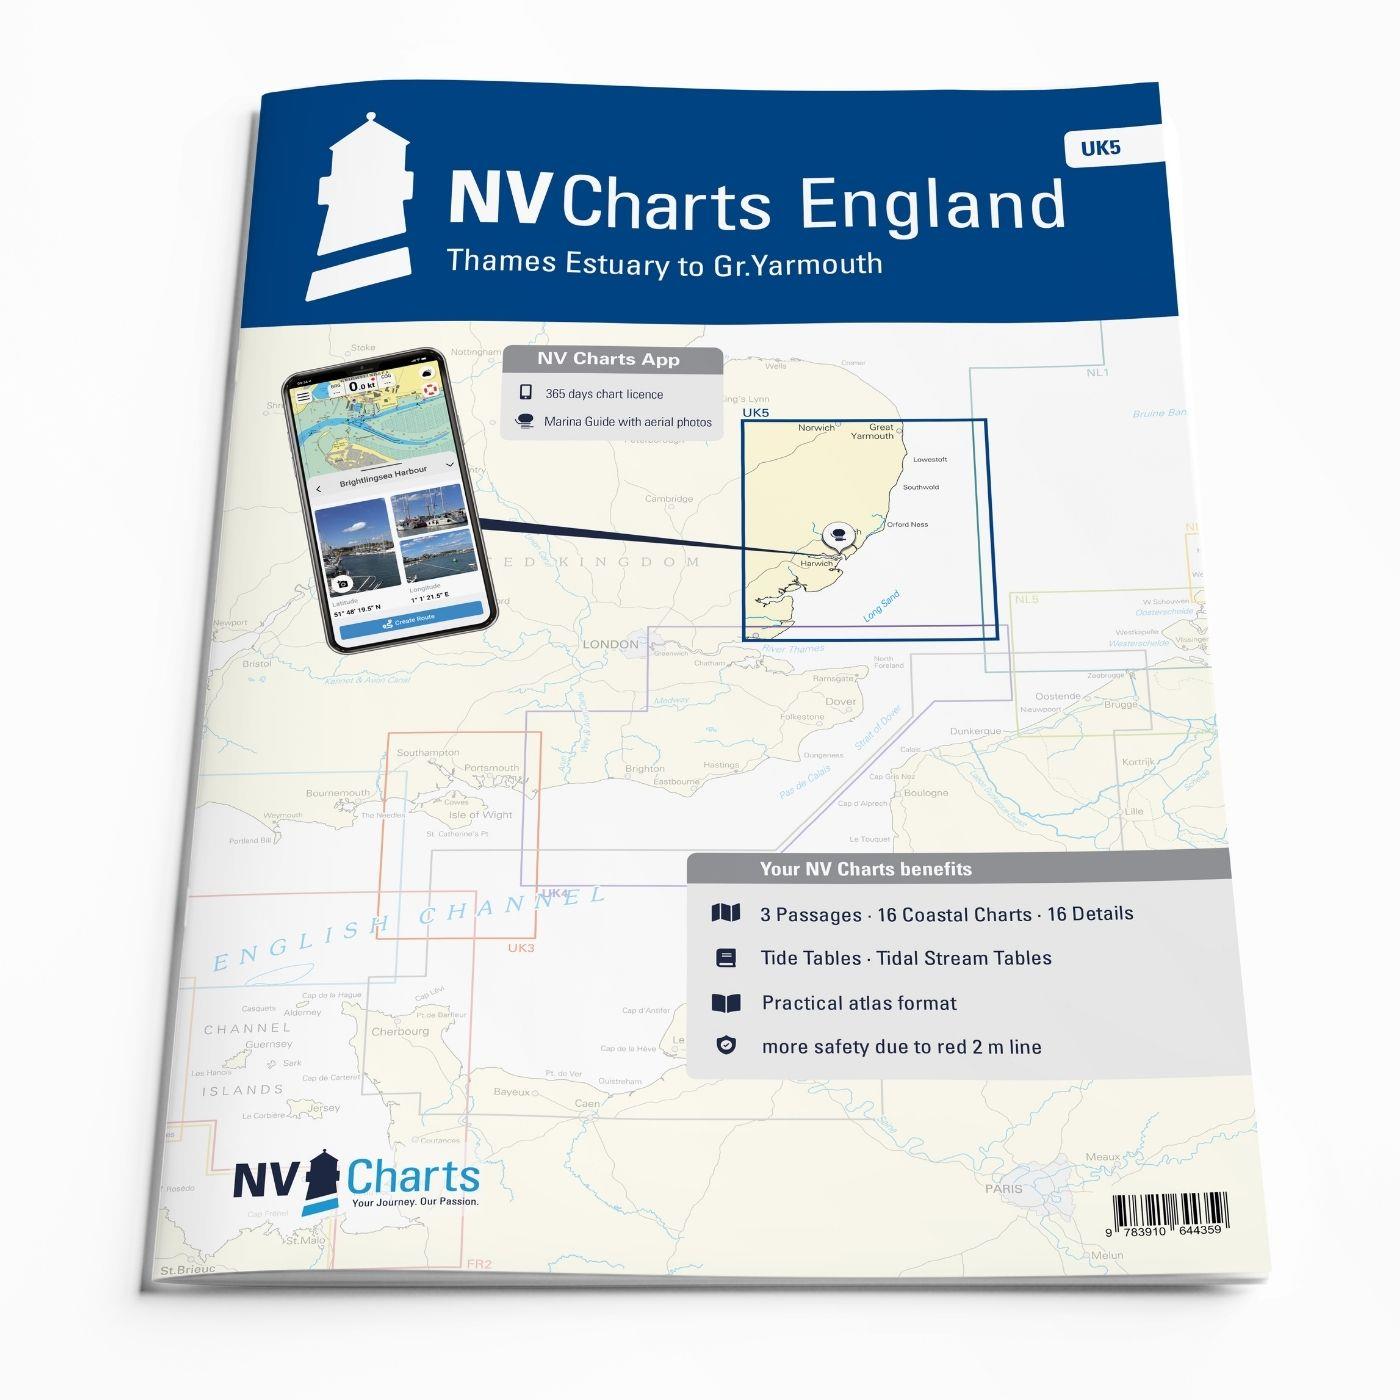 NV Charts England UK5 - Thames Estuary to Great Yarmouth